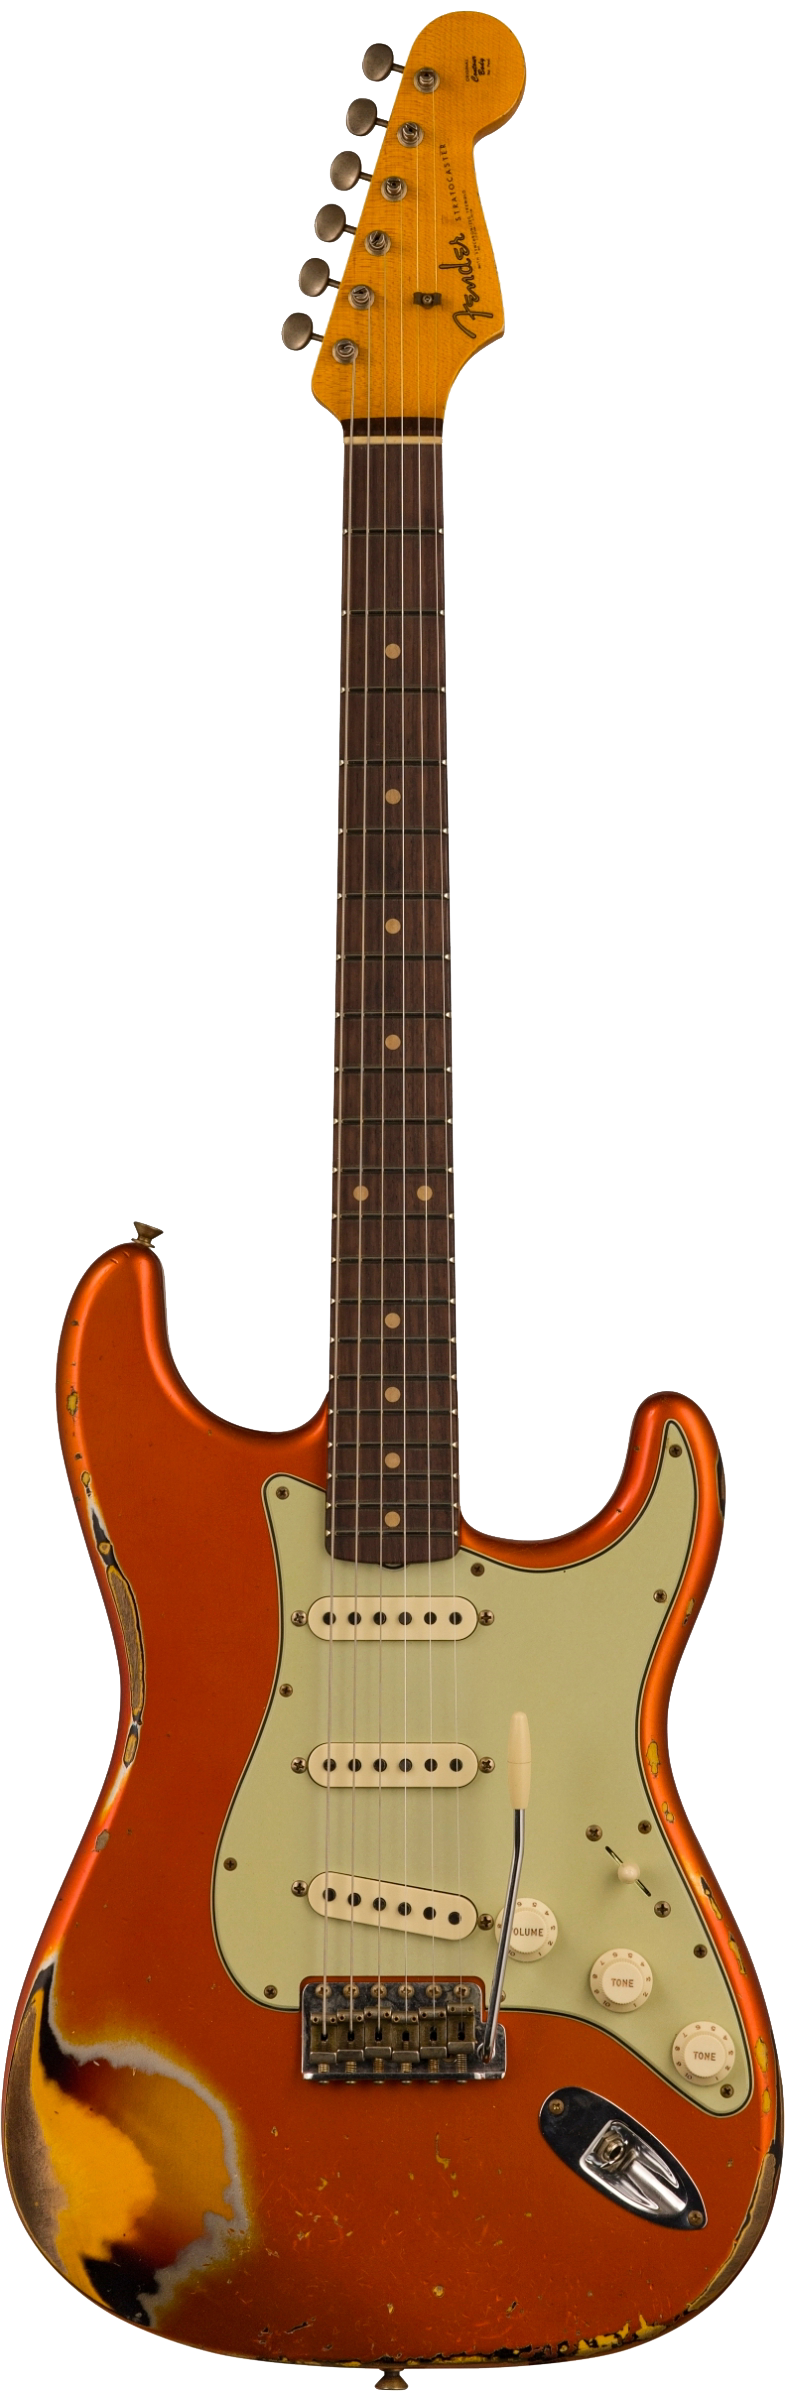 Full front shot of Fender Custom Shop Limited Edition 62 Strat Heavy Relic Aged Candy Tangerine Over 3 Color Sunburst.